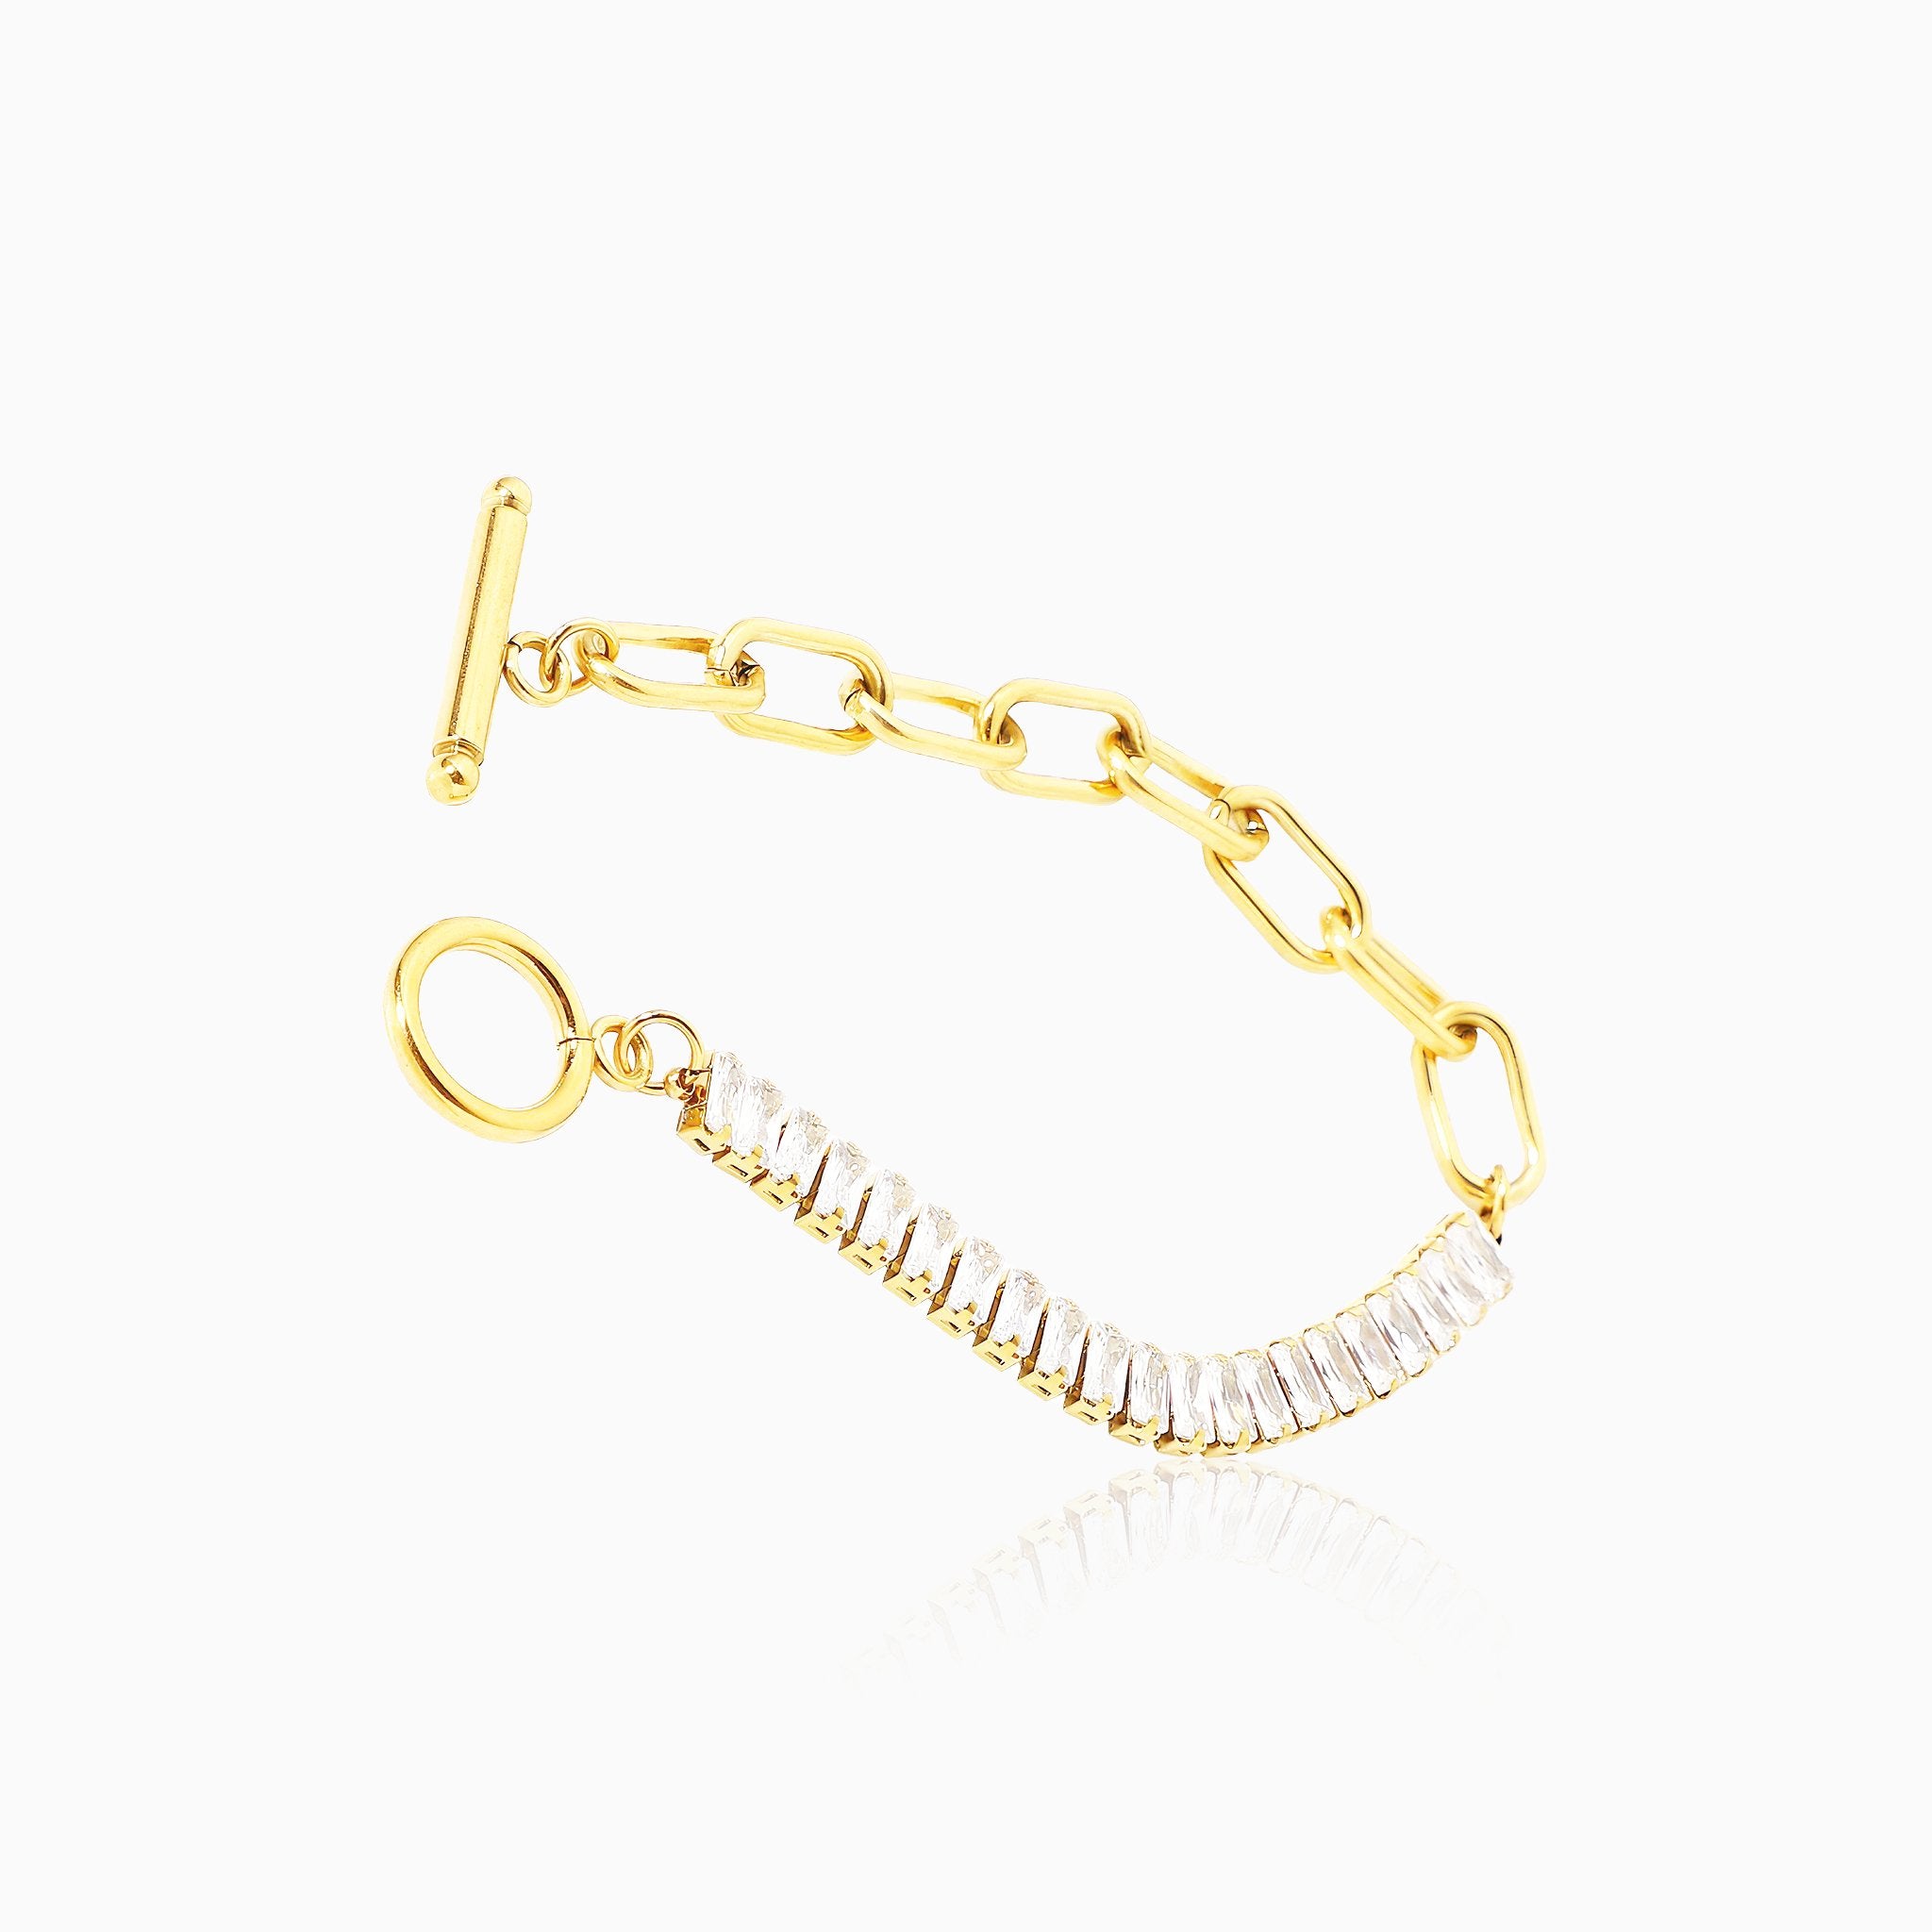 OT Buckle Gemstone Bracelet - Nobbier - Bracelet - 18K Gold And Titanium PVD Coated Jewelry